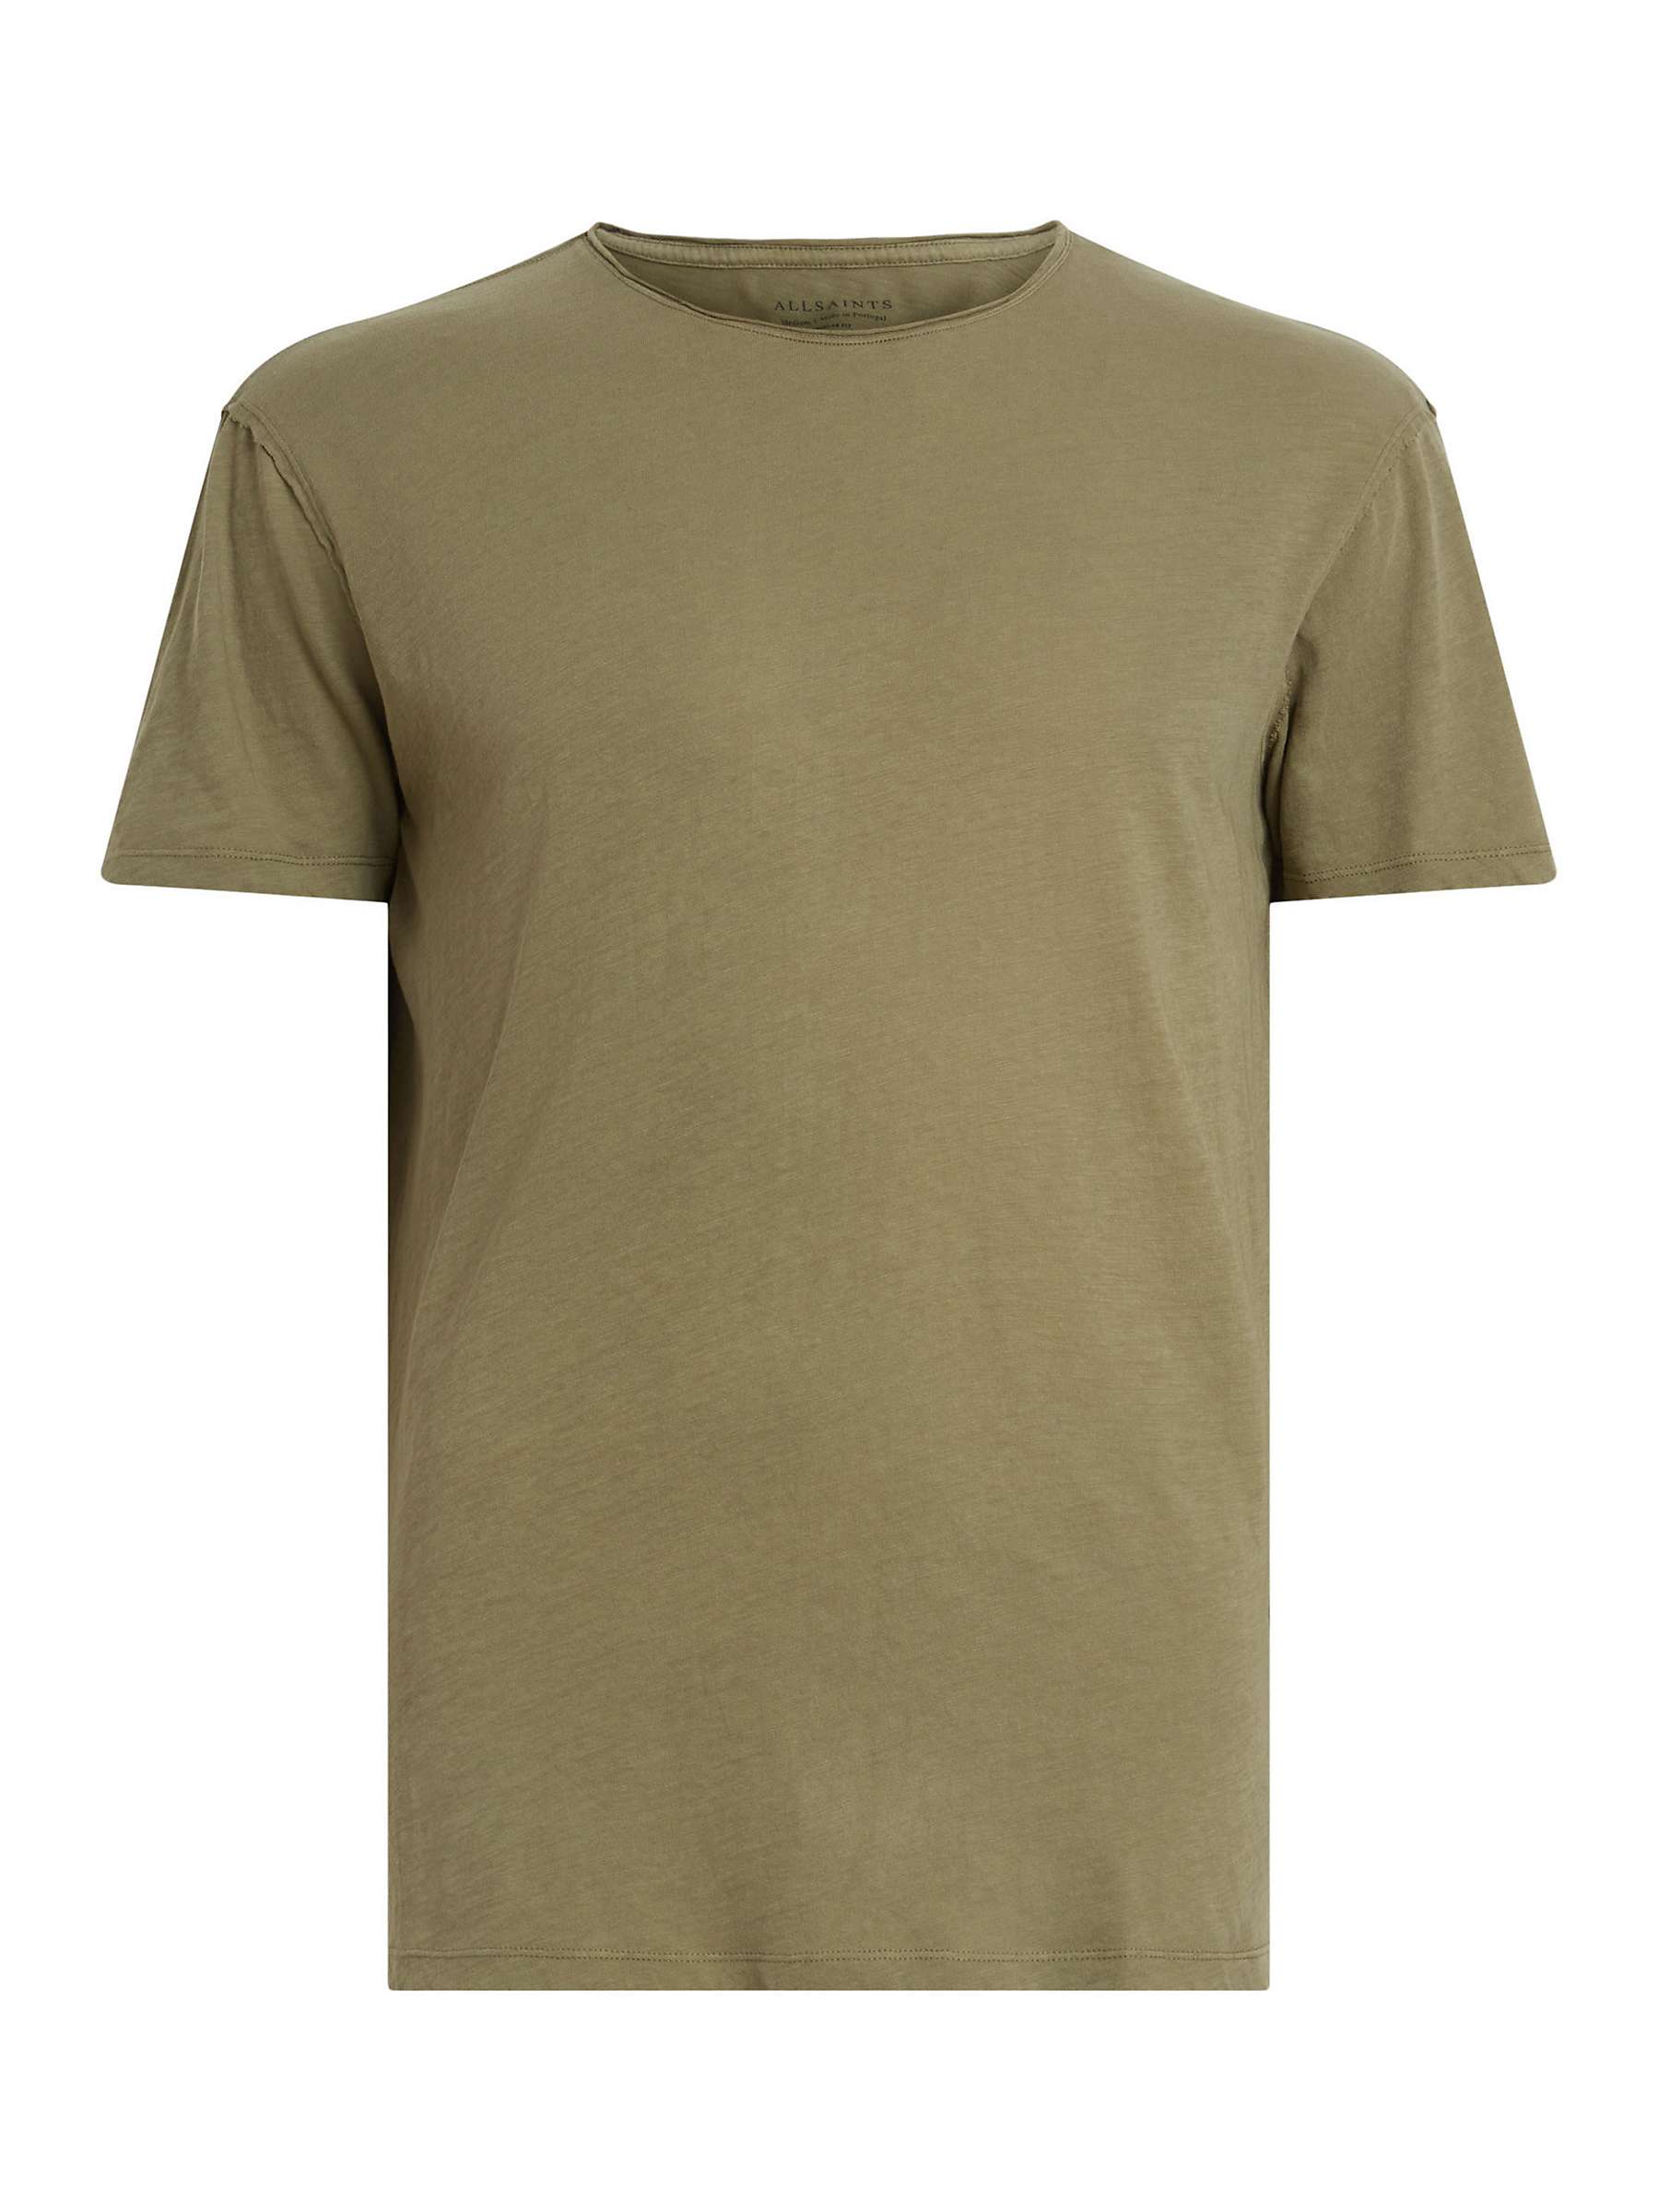 Buy AllSaints Figure Short Sleeve Crew Neck T-Shirt Online at johnlewis.com